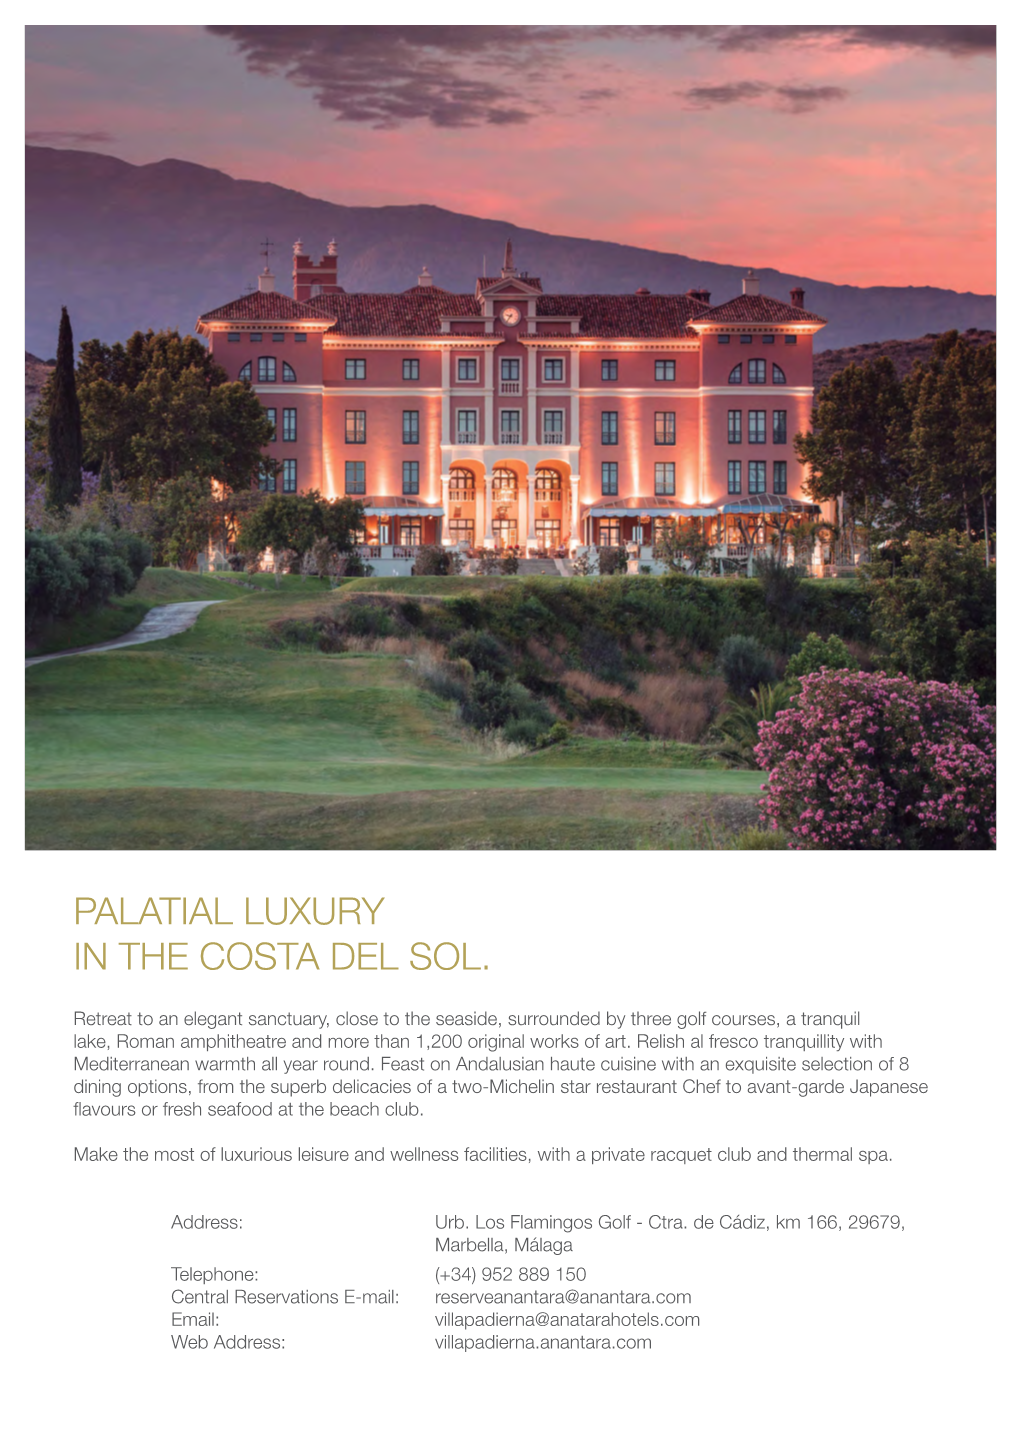 Palatial Luxury in the Costa Del Sol